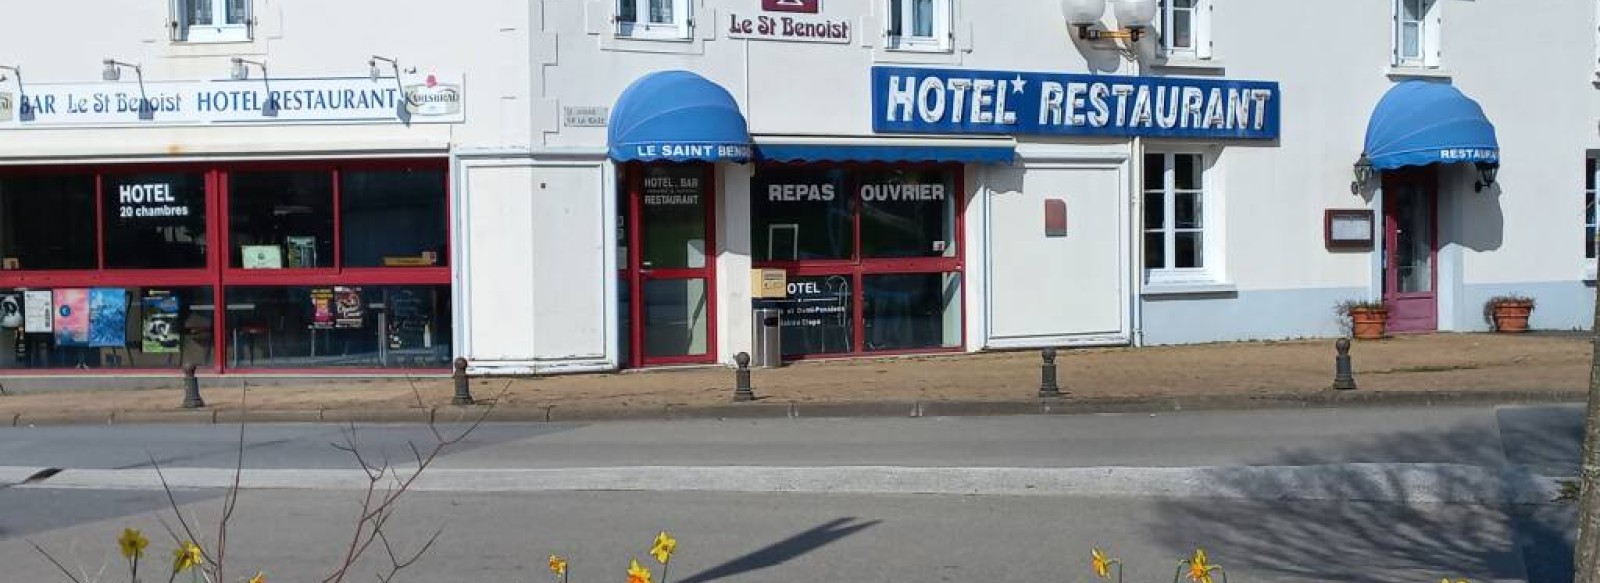 HOTEL-RESTAURANT LE SAINT BENOIST